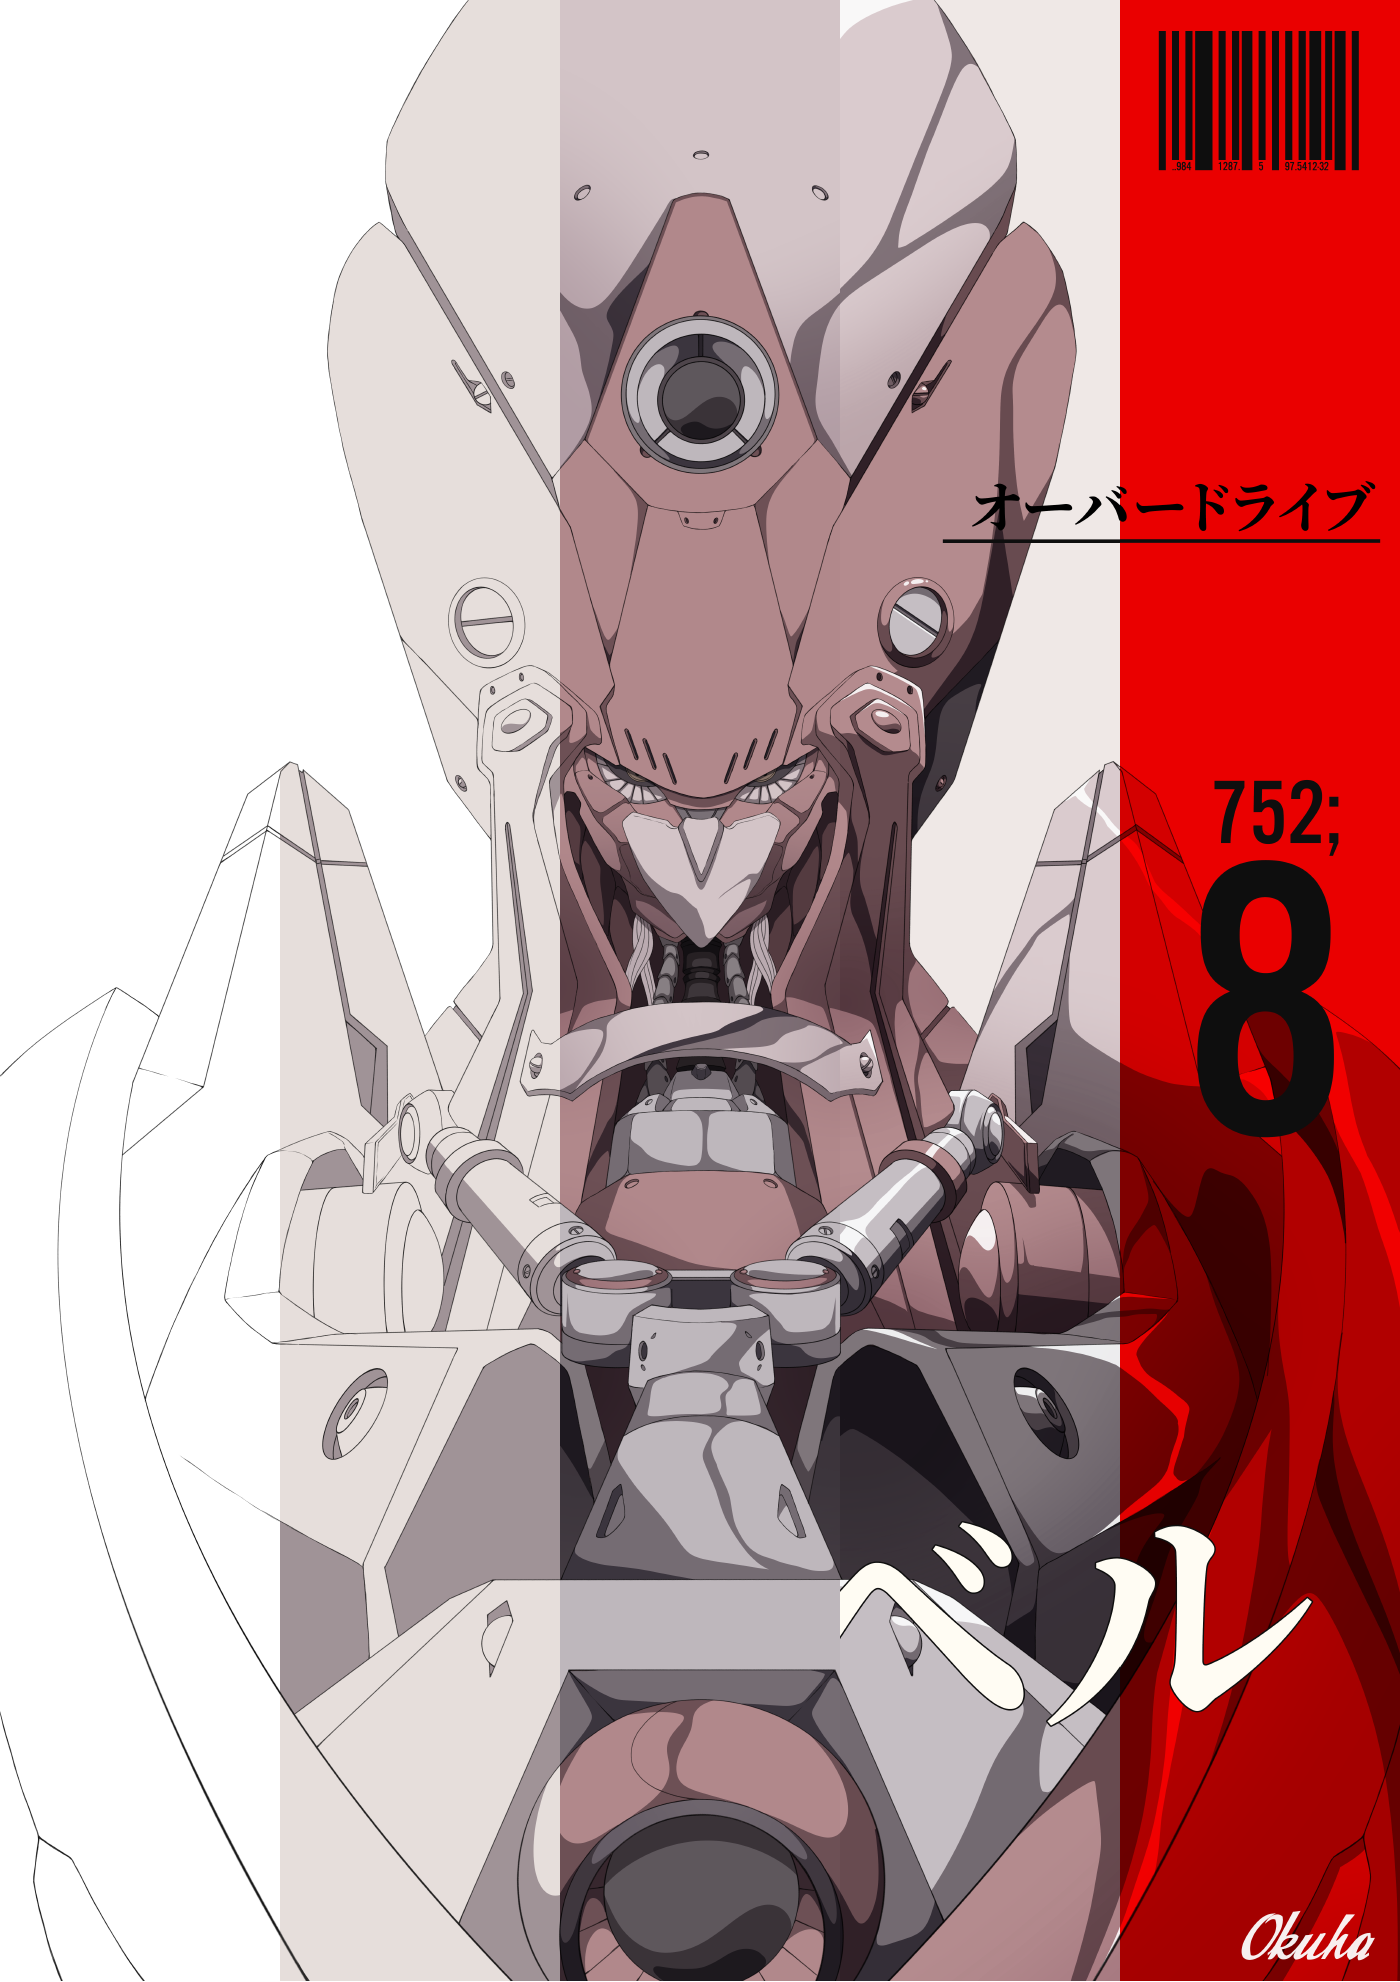 mech anime manga cel shading red japan kanji companion metal